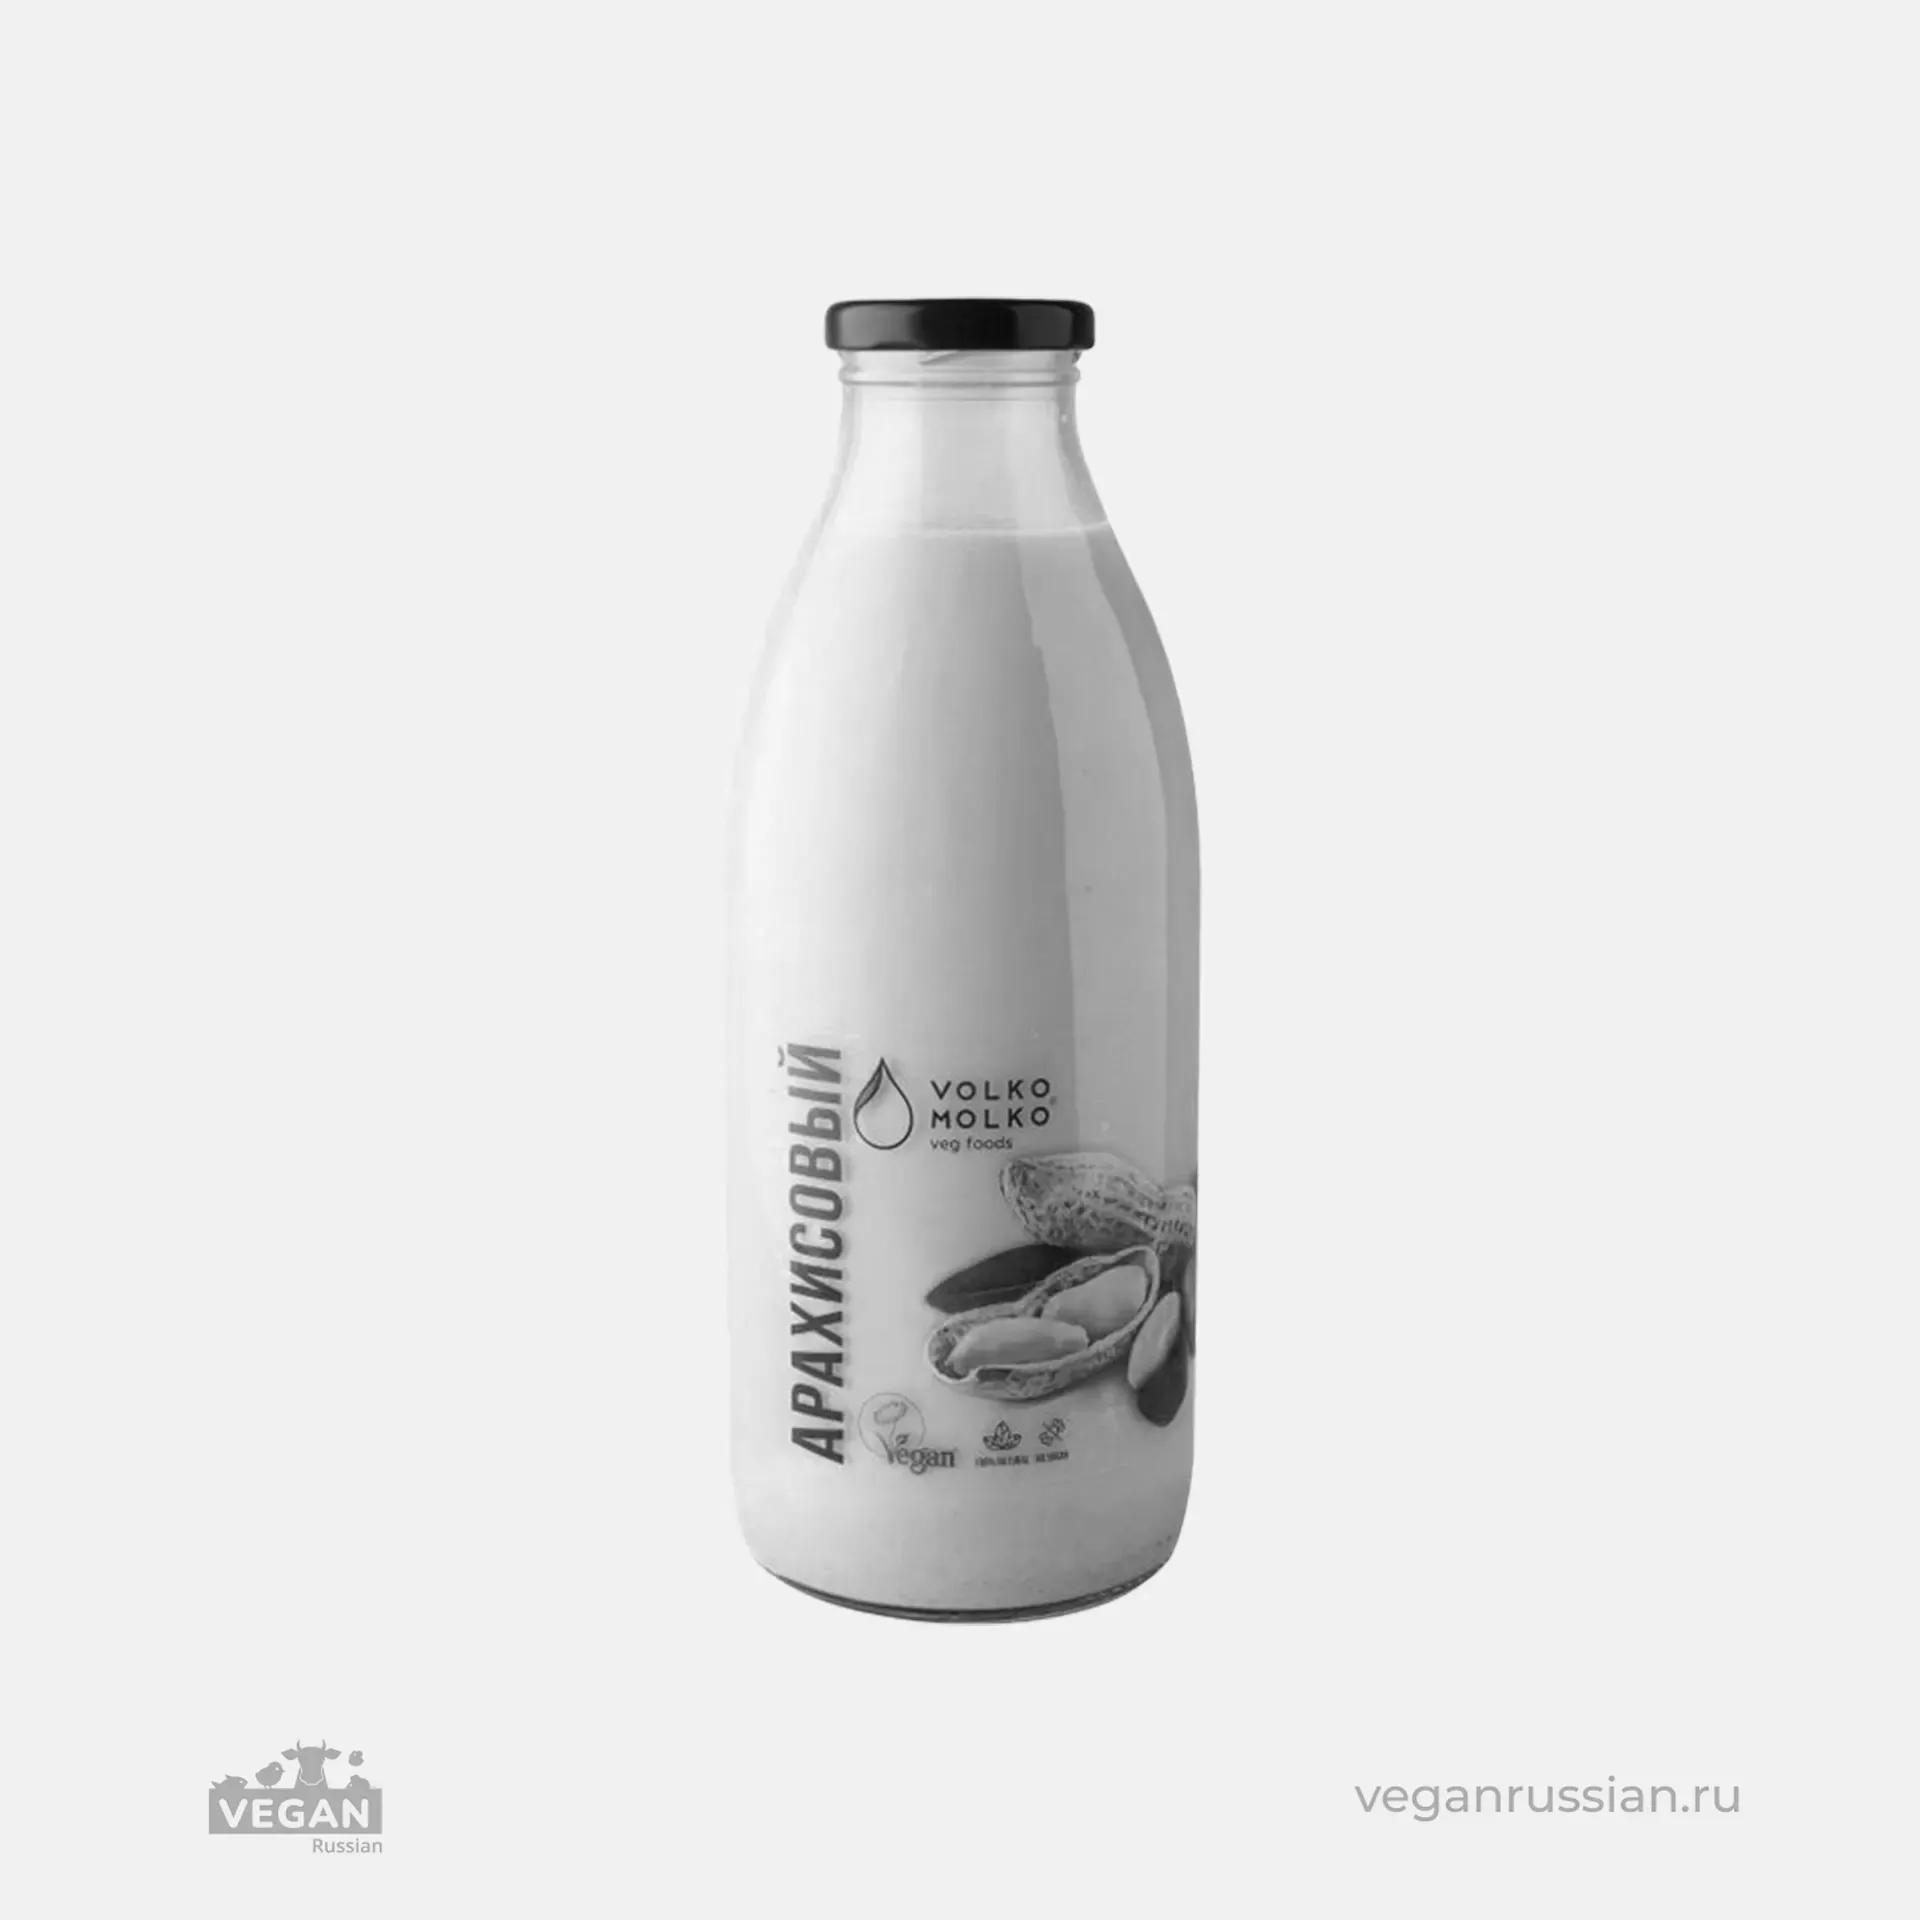 Архив: Молоко арахисовое VolkoMolko 0,3-0,75 л